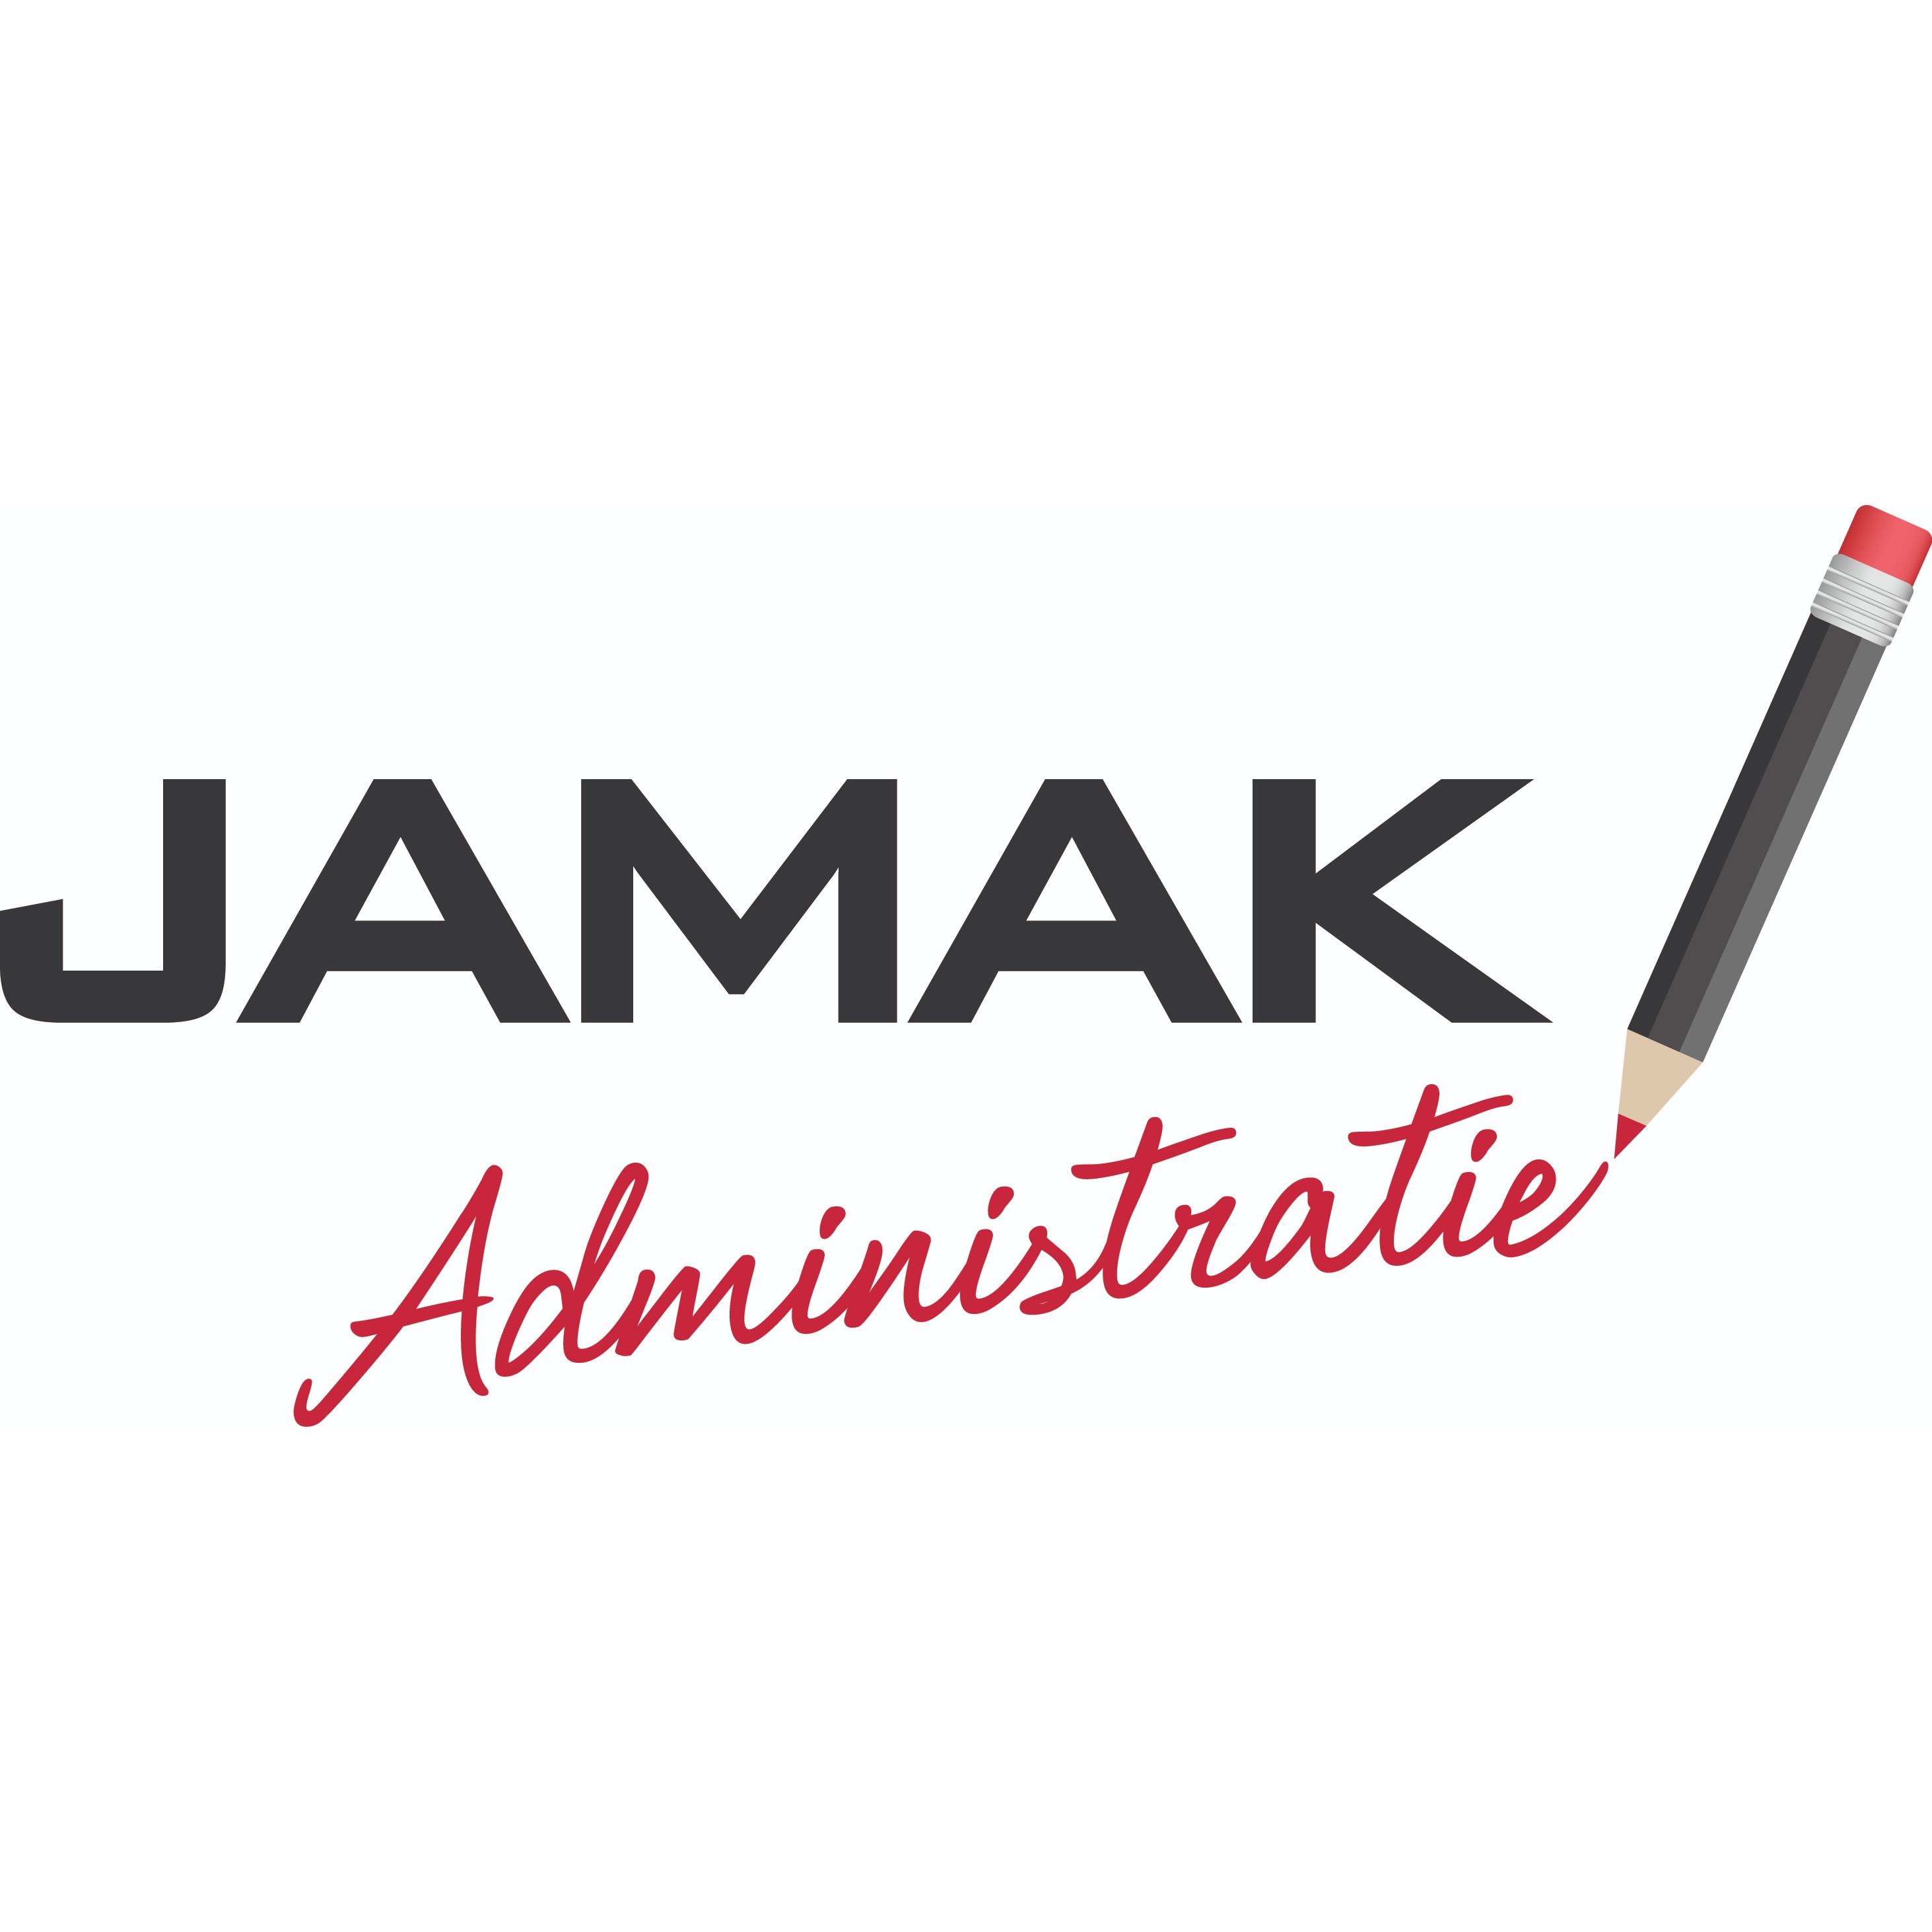 Jamak Administratie Logo